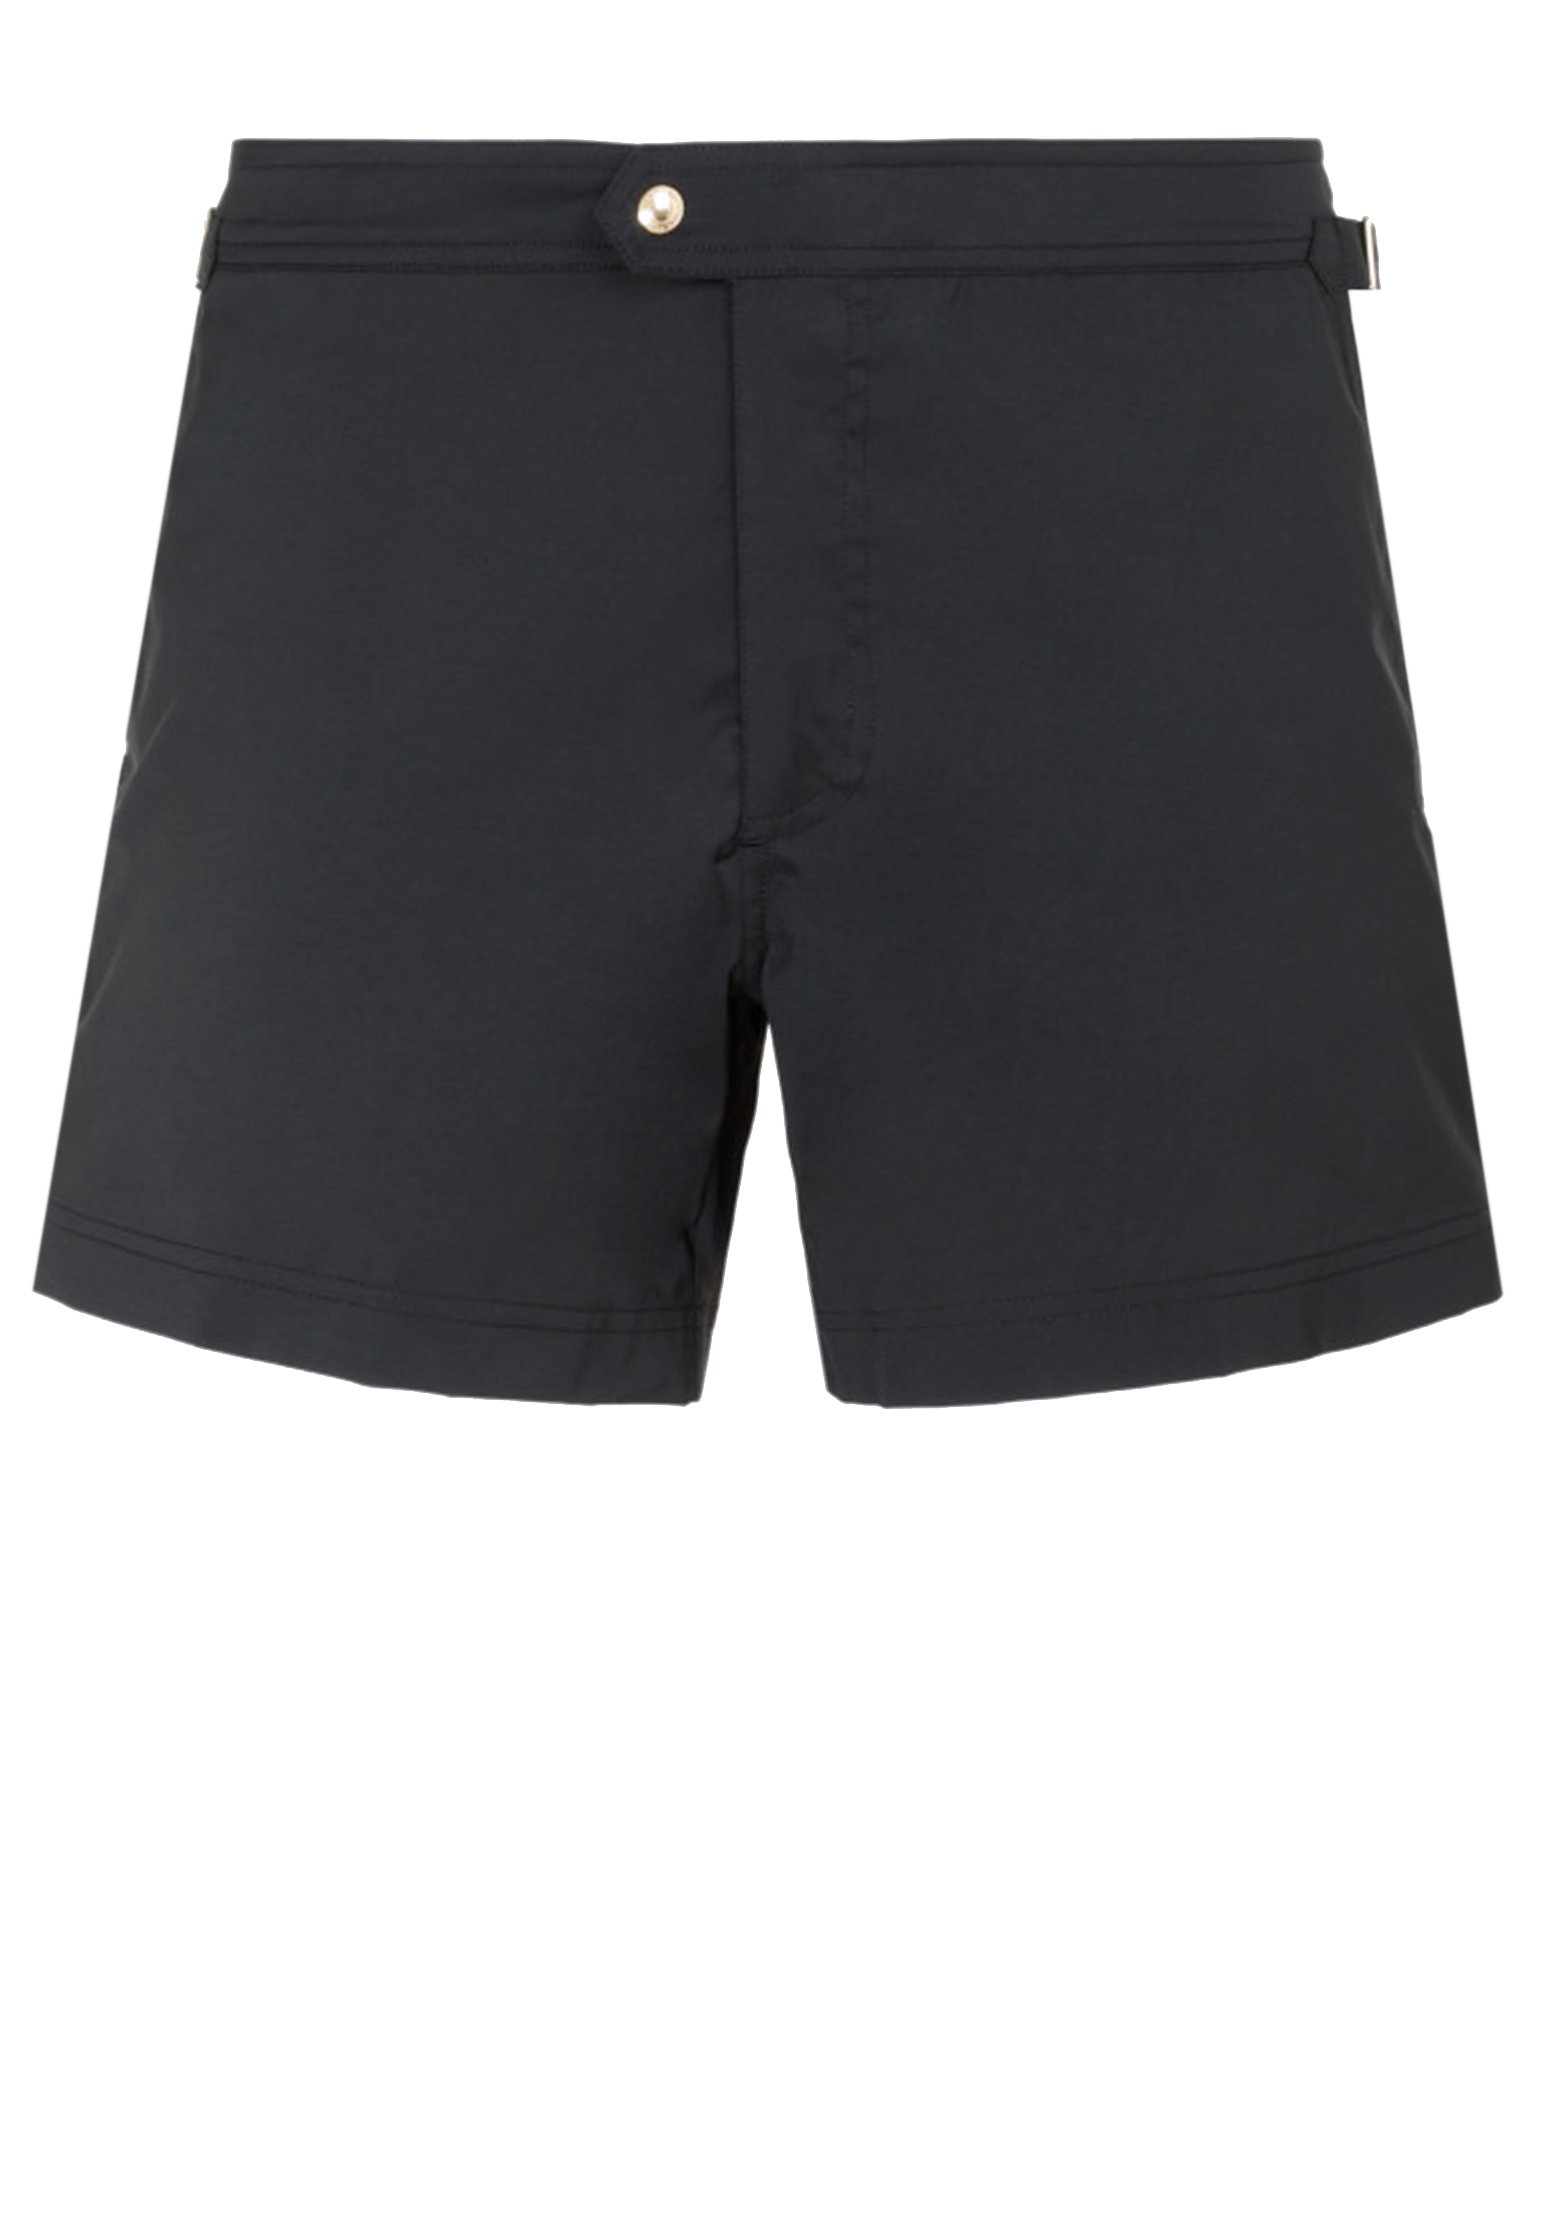 Beachwear TOM FORD Color: black (Code: 439) in online store Allure